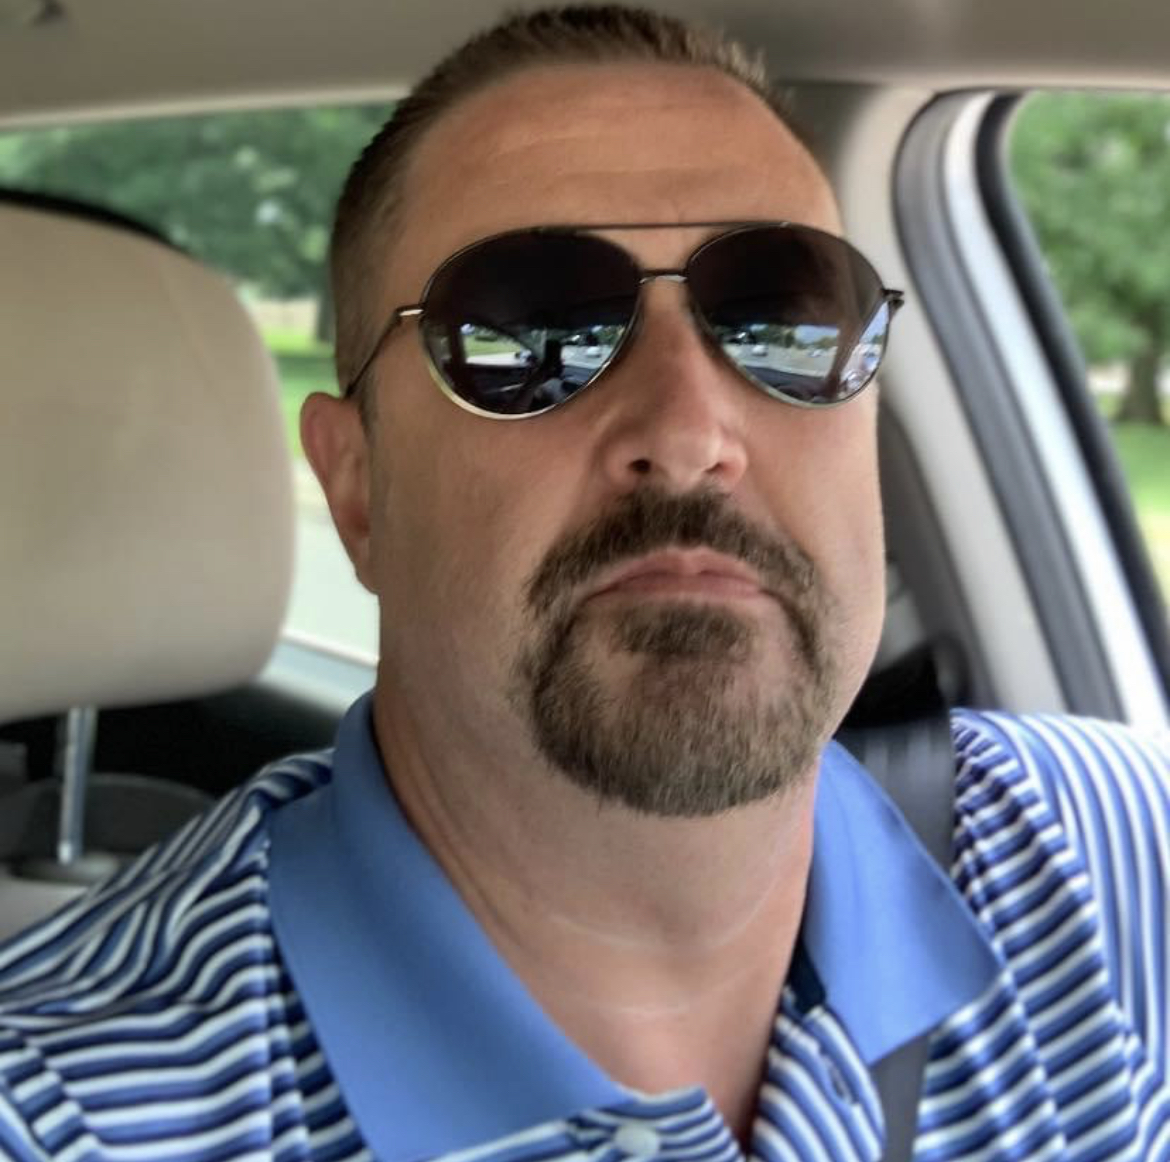 derek duckett add sunglasses selfie in a car meme photo